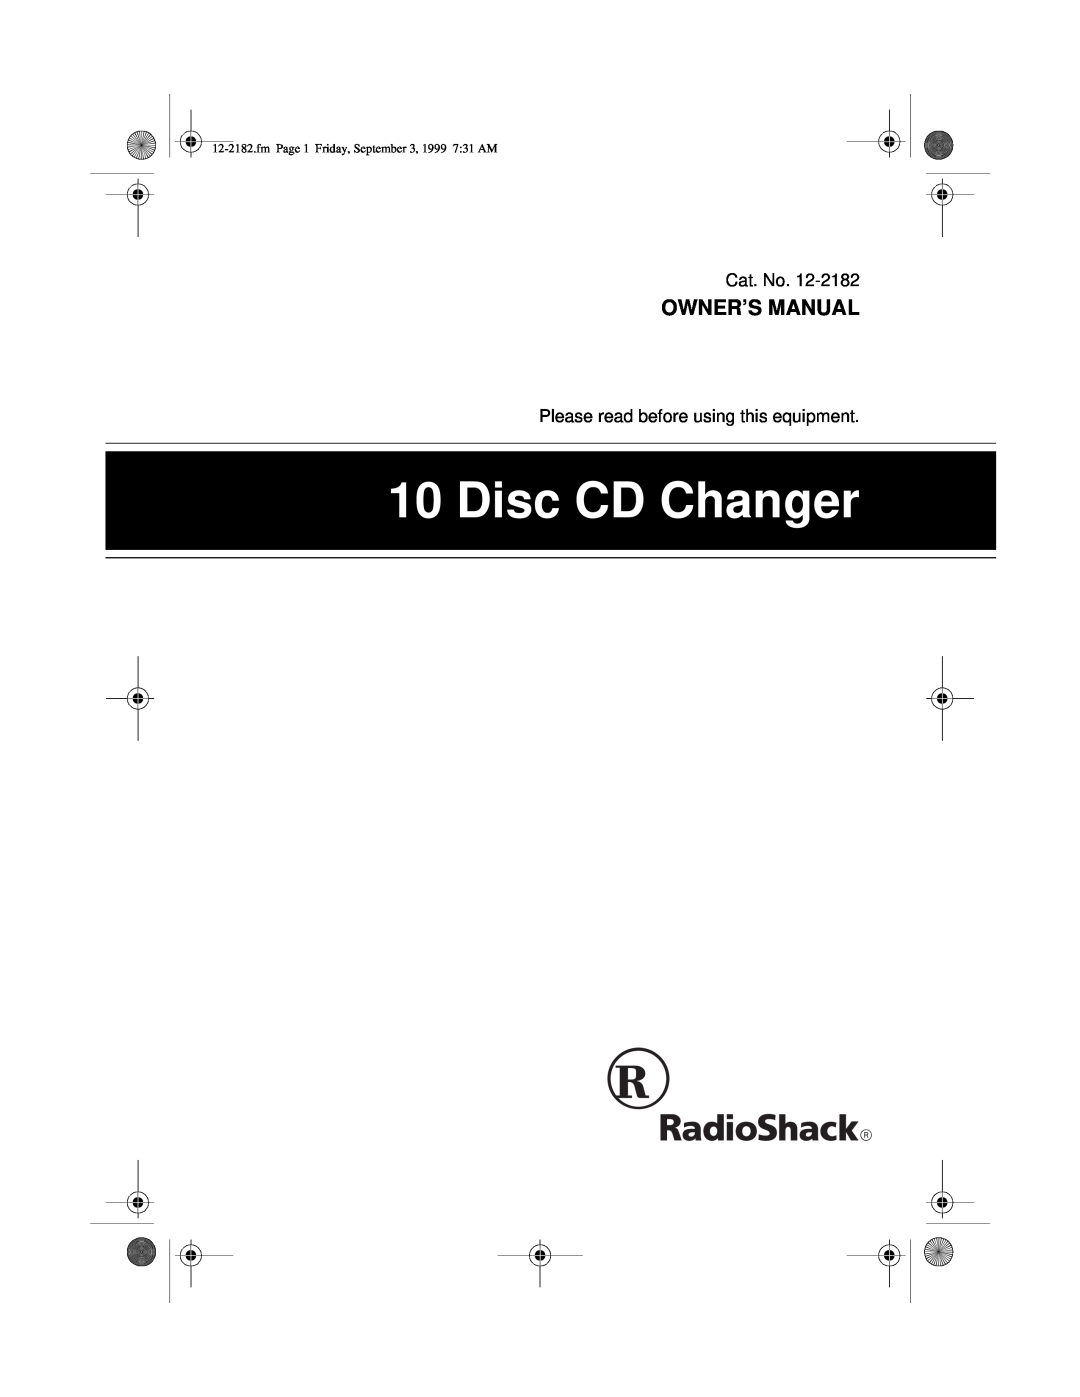 Radio Shack 10 Disc CD Changer owner manual 